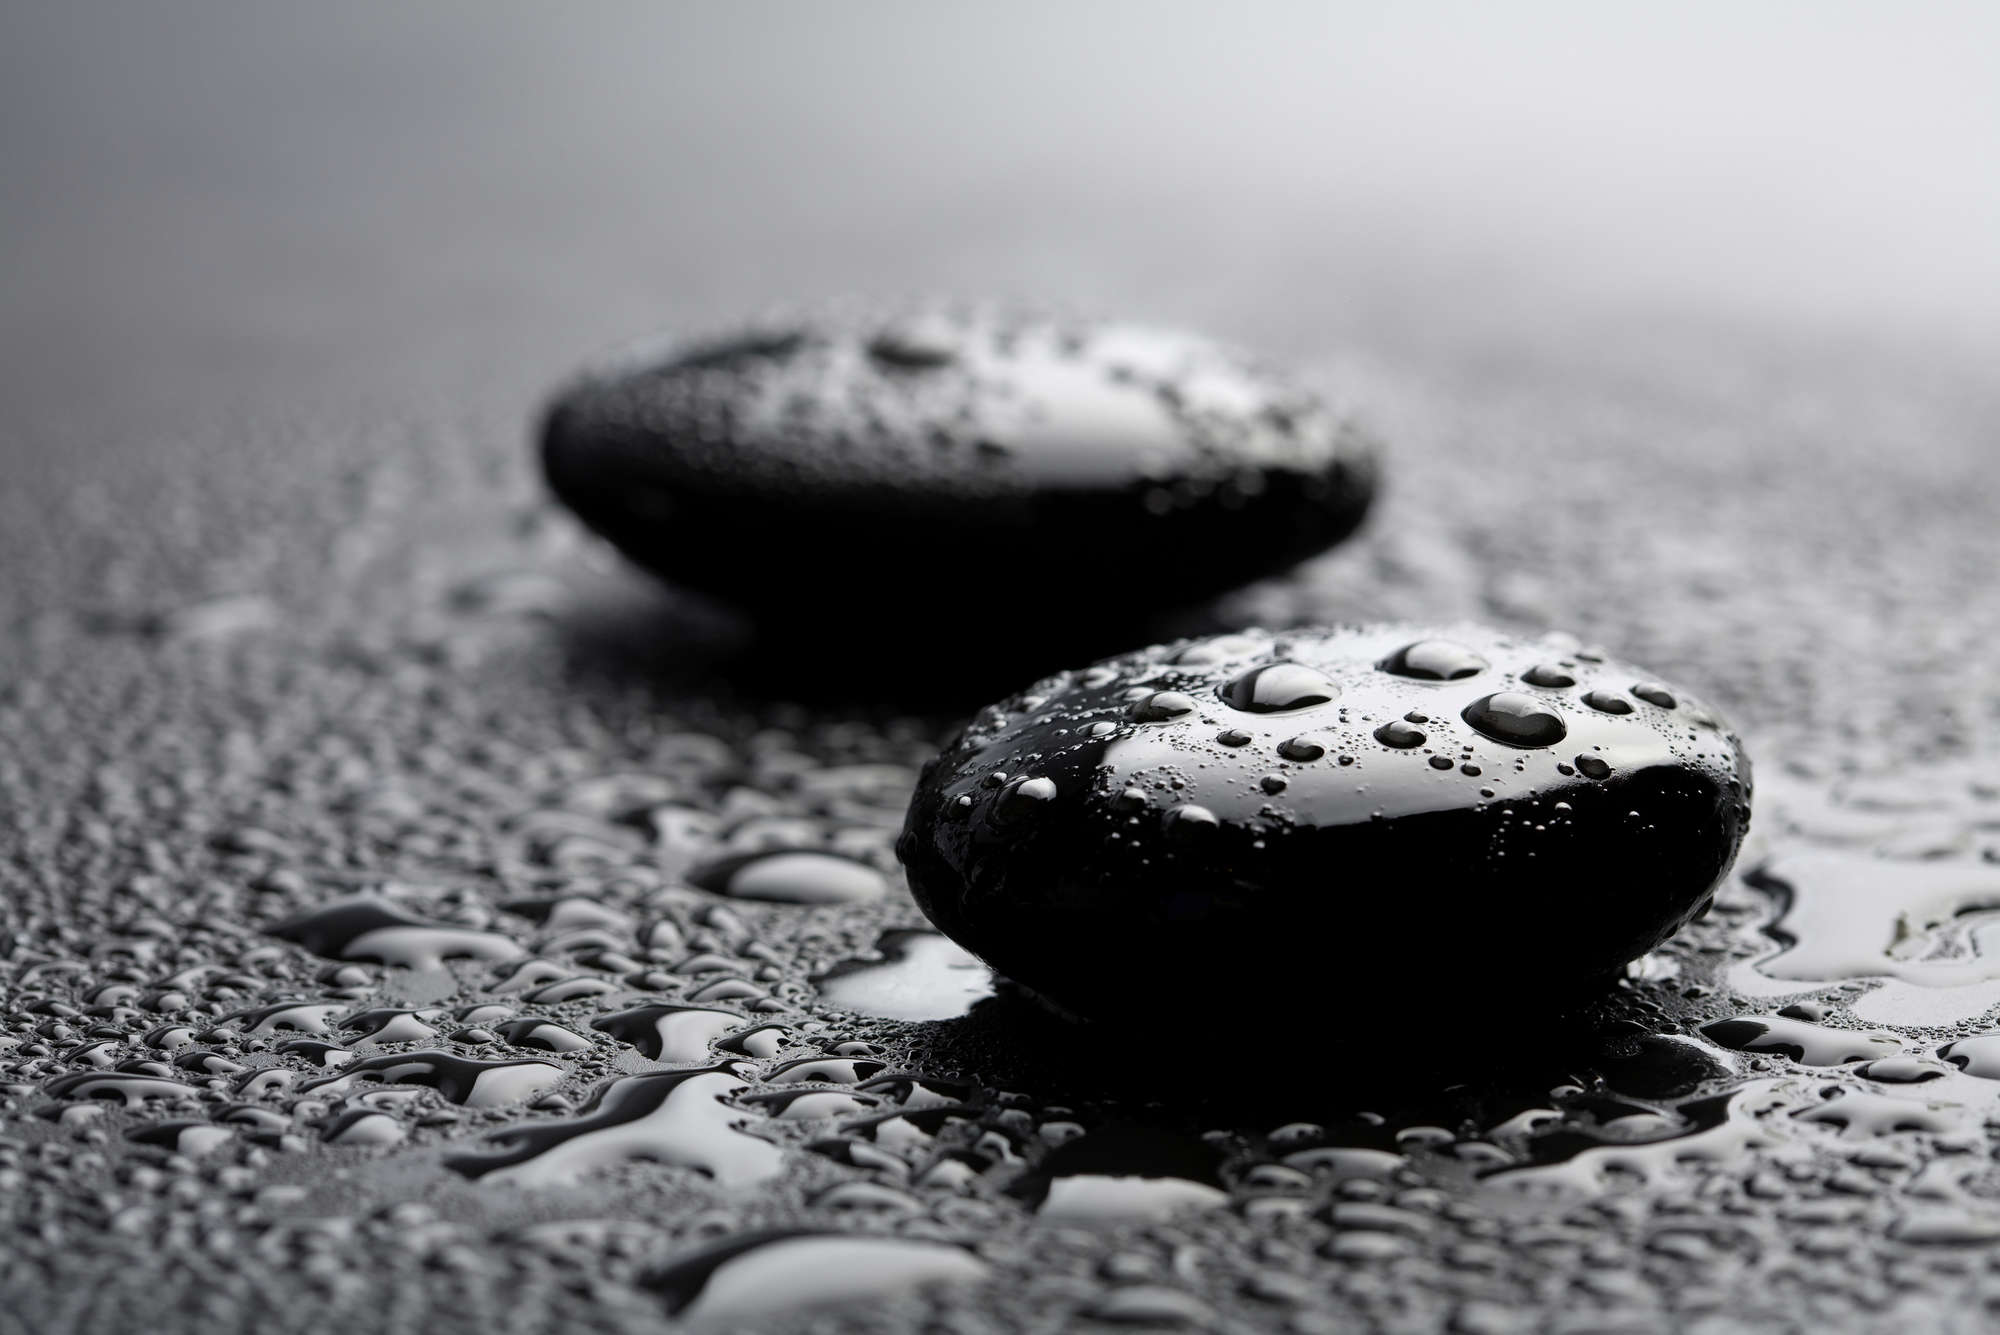             Photo wallpaper Wellness Stones with Water Drops - Matt smooth non-woven
        